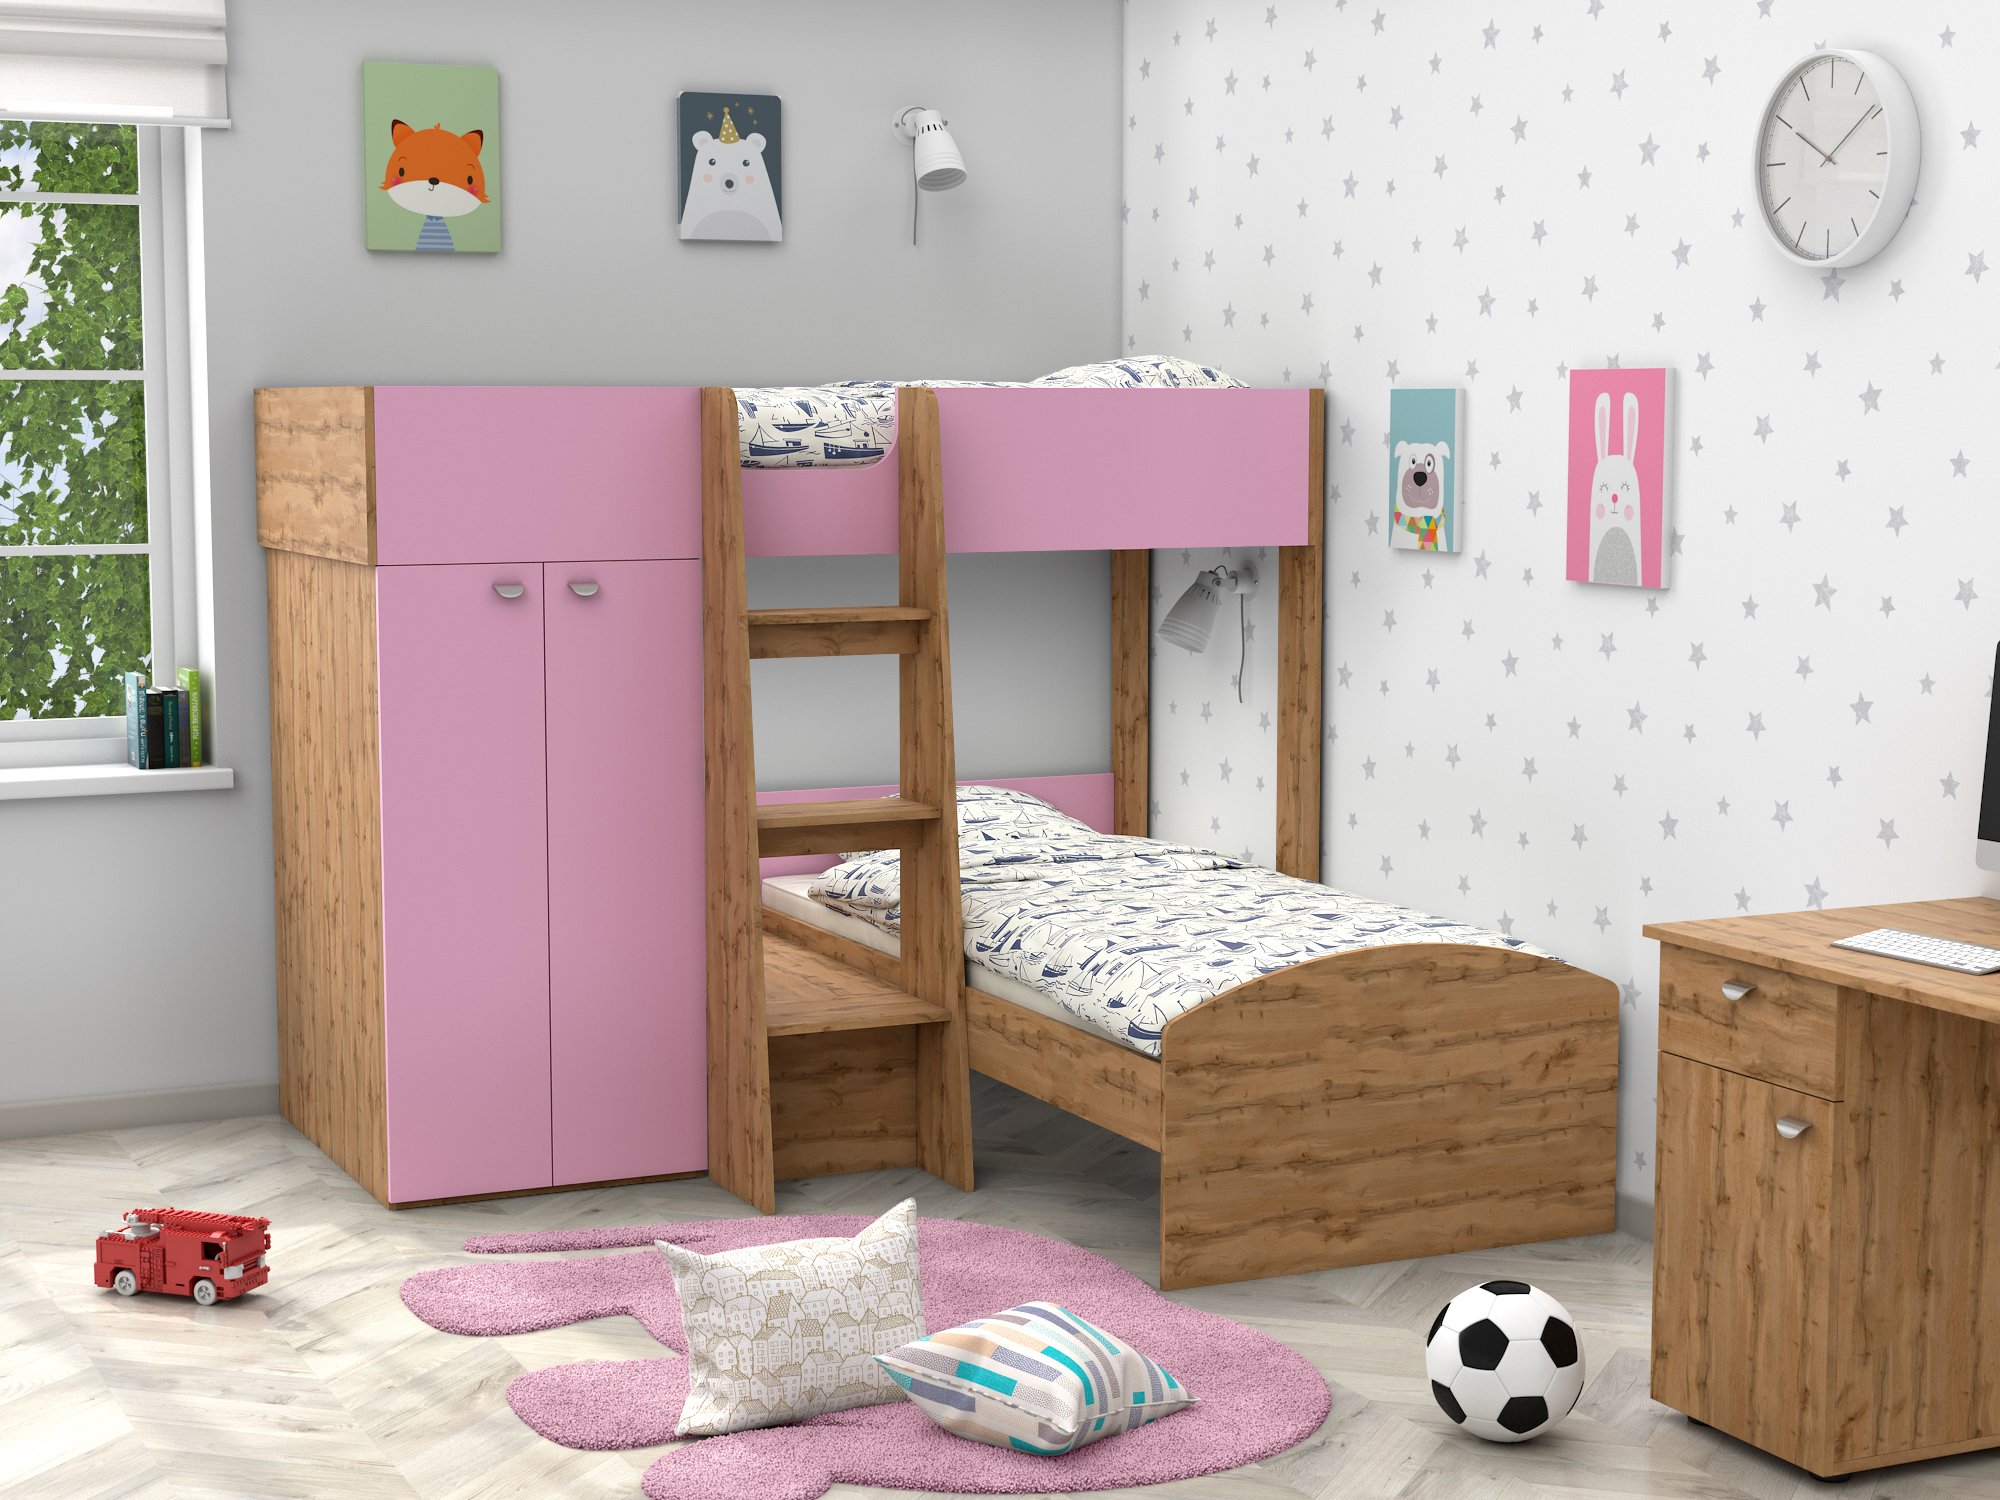 Двухъярусная кровать Golden Kids-4 (90х200) Розовый, Бежевый, ЛДСП двухъярусная кровать golden kids 4 90х200 дуб молочный белый бежевый лдсп